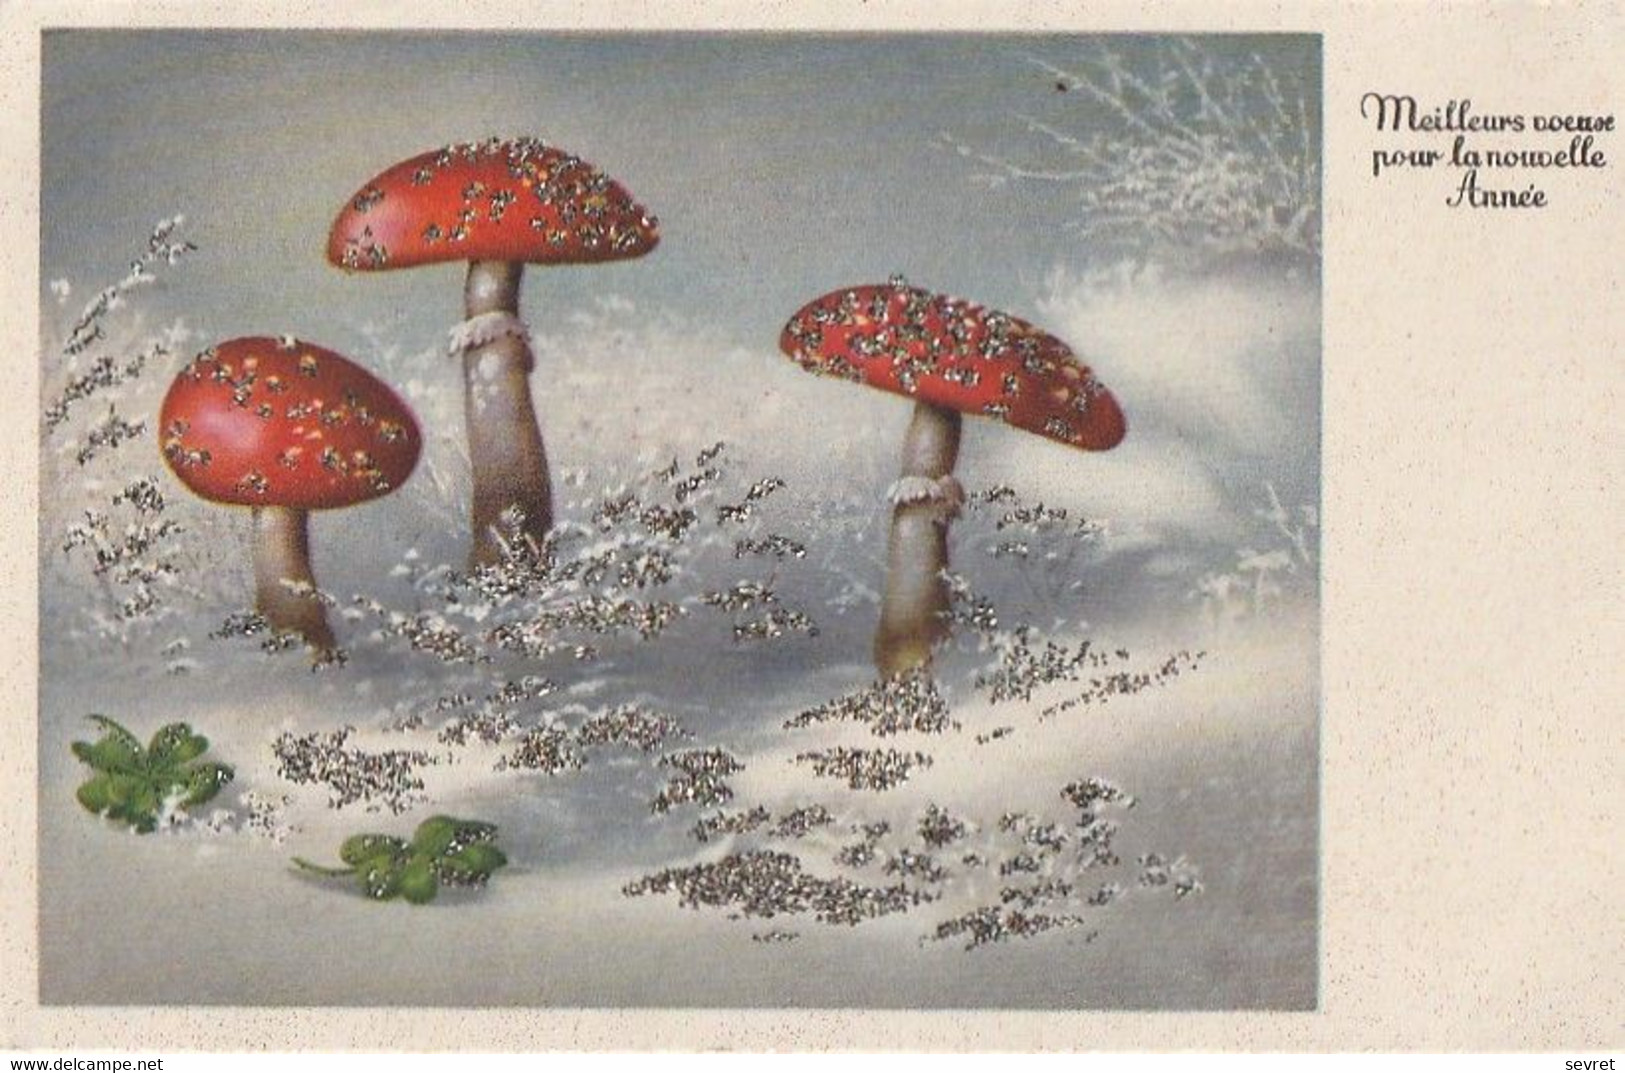 Belle Carte Représentant Trois Champignons Avec Incrustations Brillants - Mushrooms